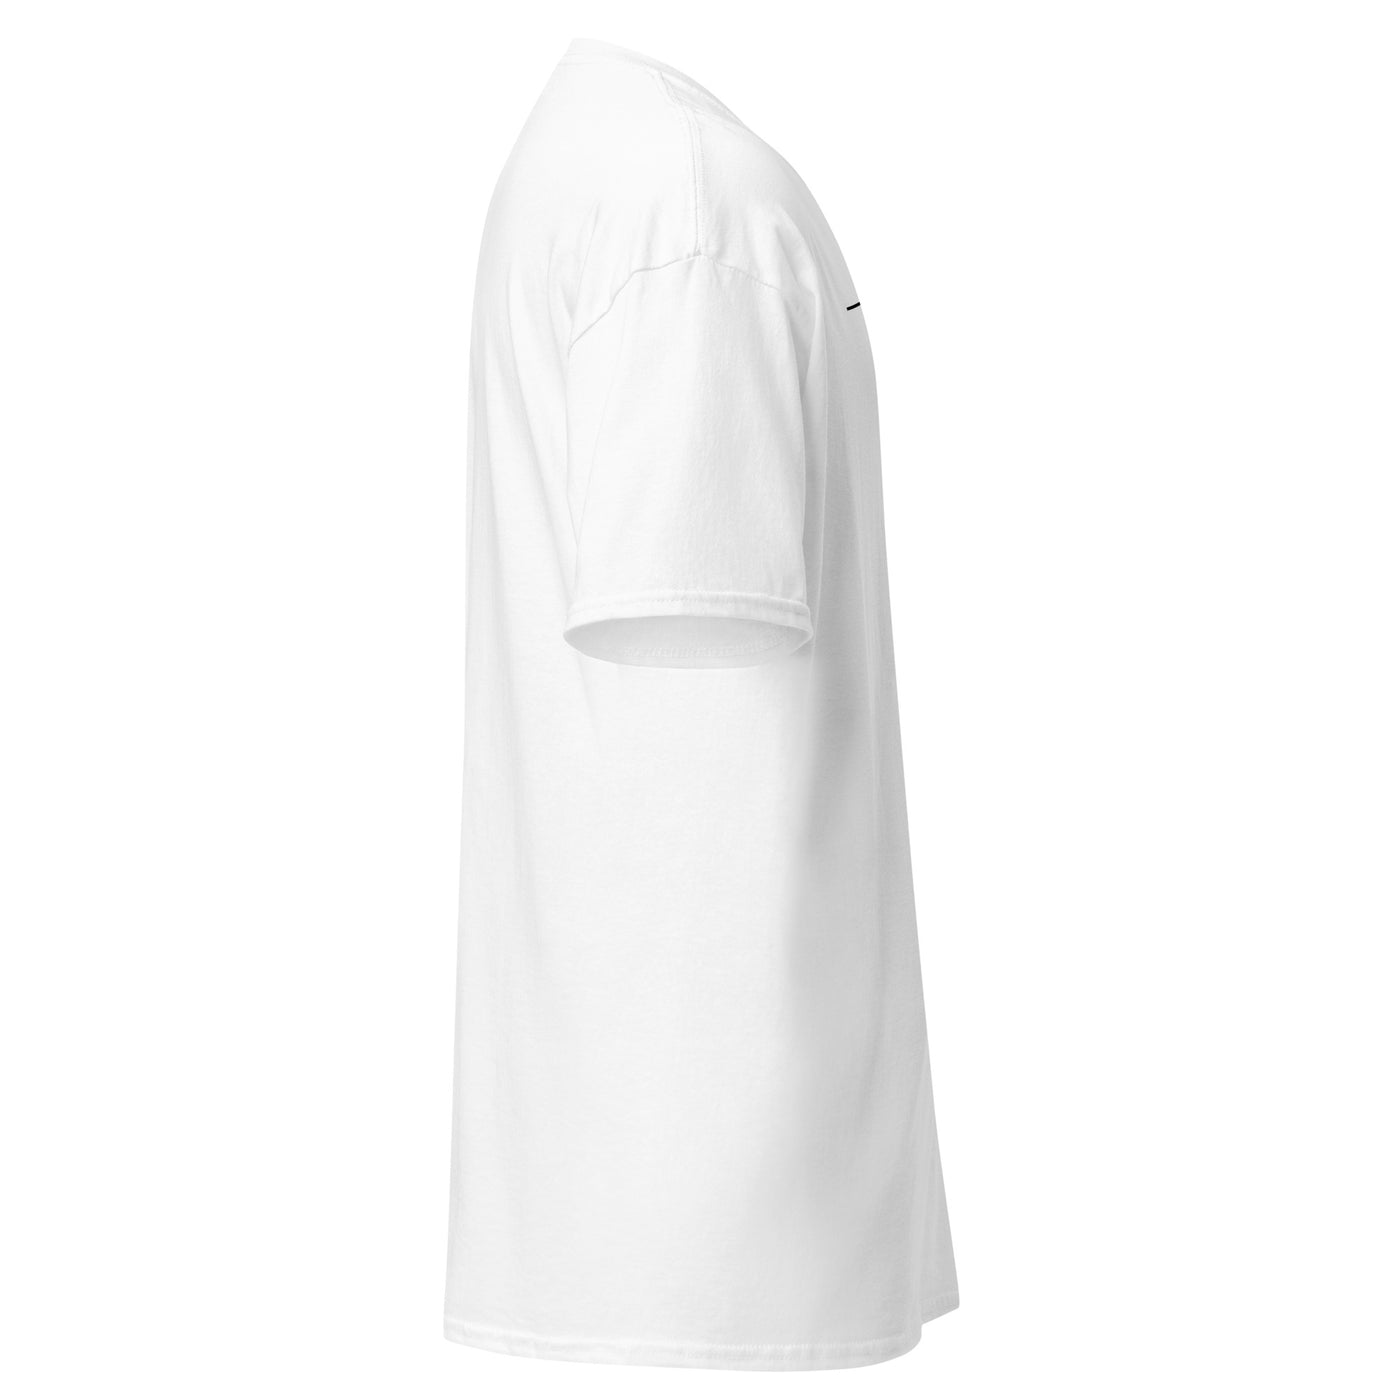 OYWO 'the 30 > life' White Unisex T-Shirt